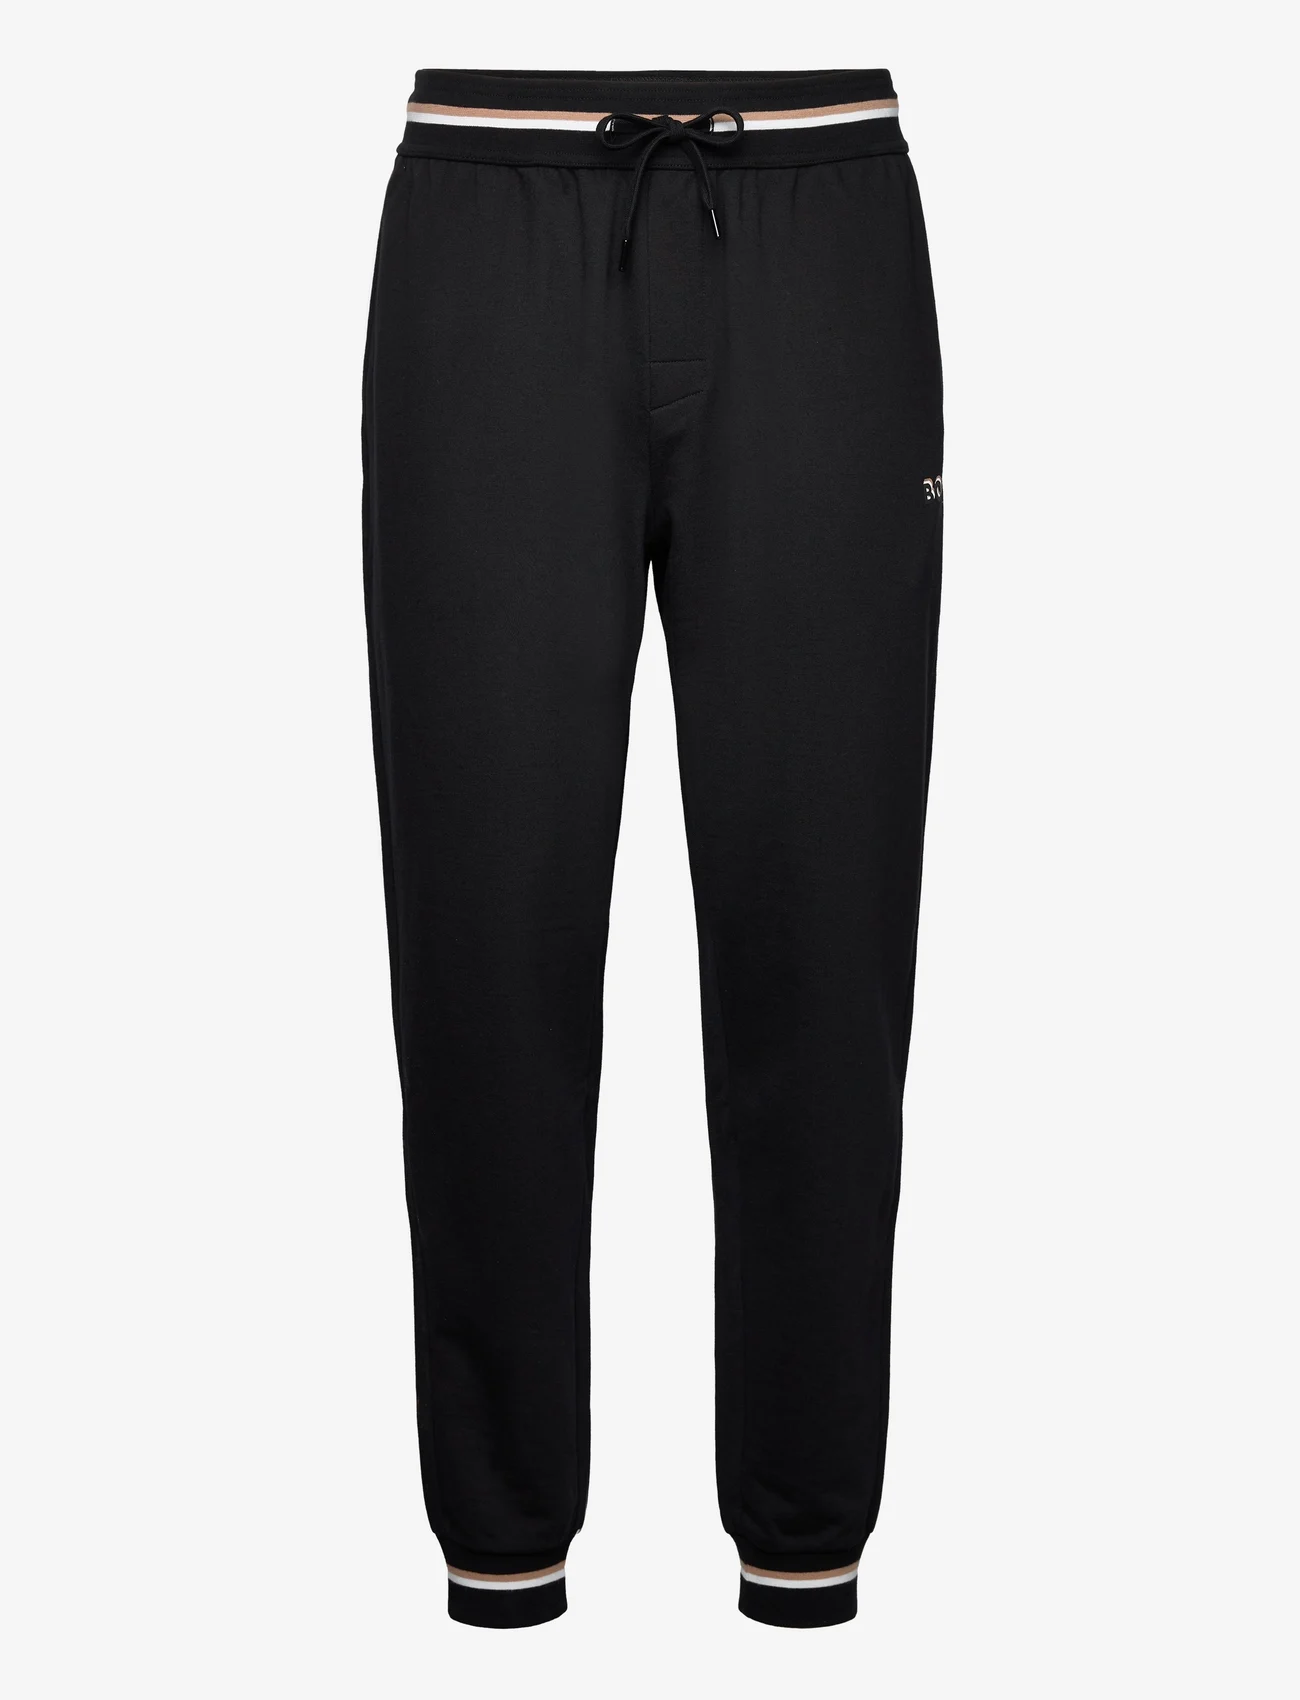 BOSS - Iconic Pants - joggebukser - black - 0